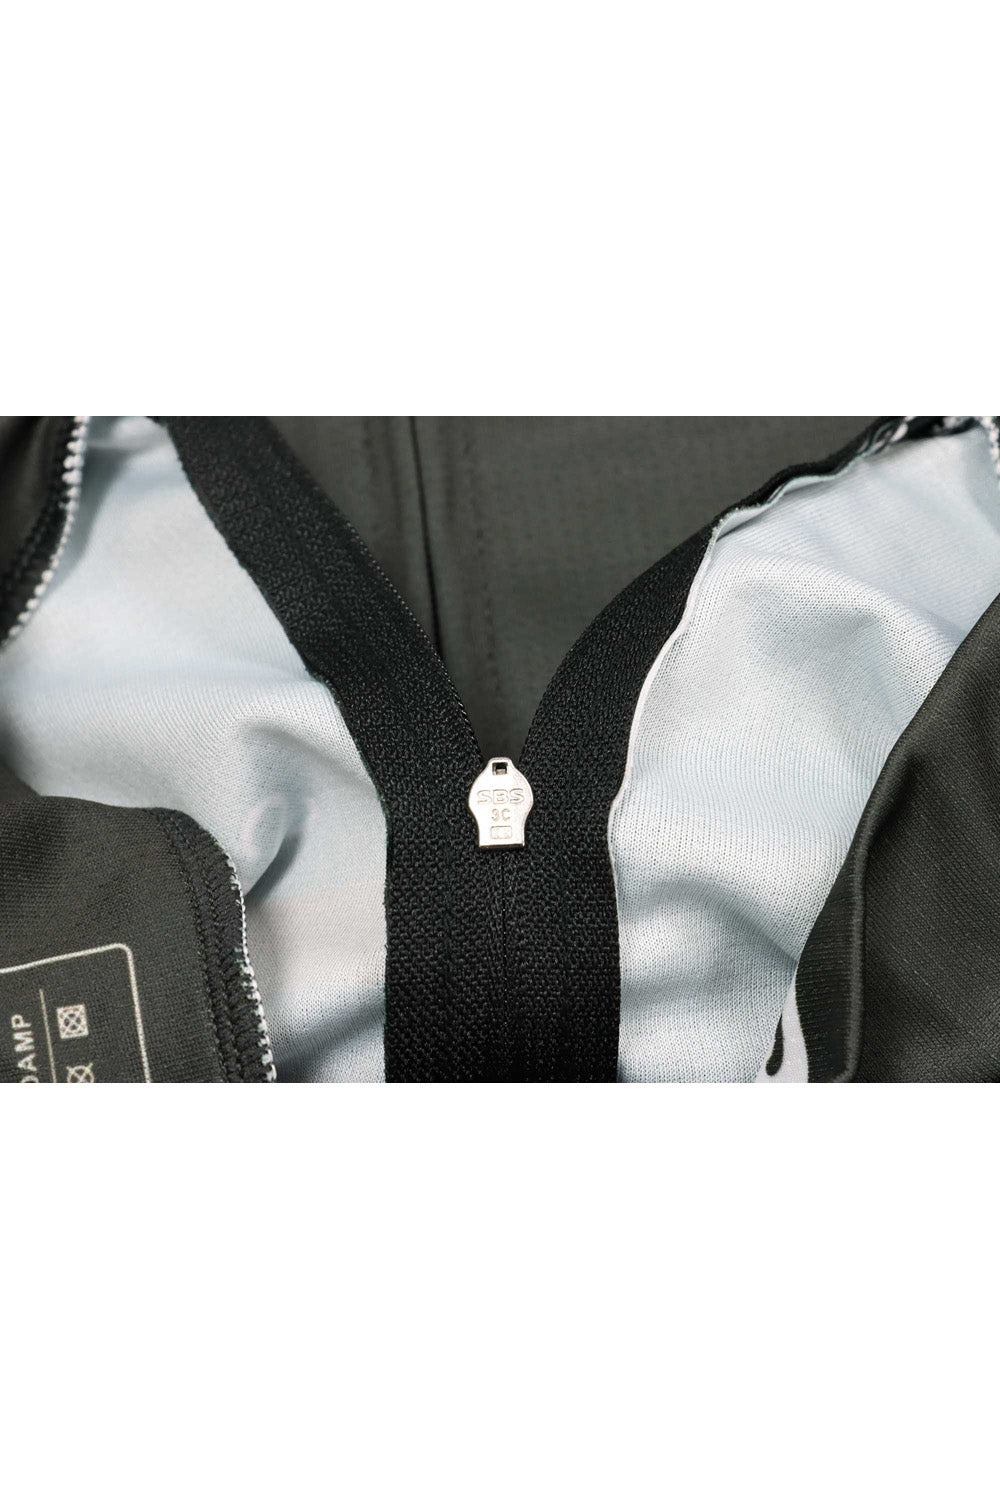 Sundried Clariden Men's Cycle Jersey Short Sleeve Jersey Activewear